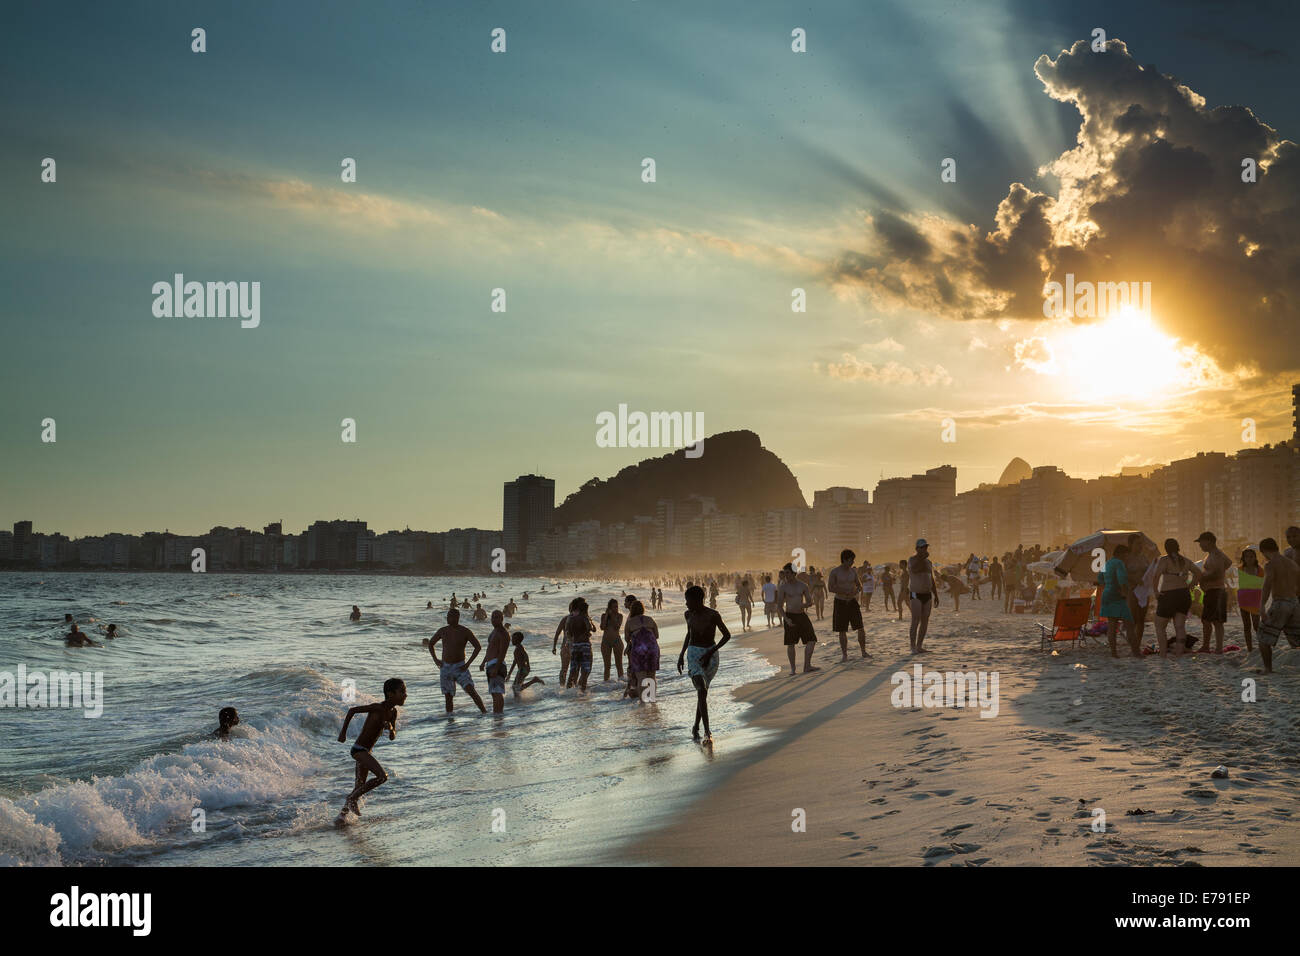 bathers and people relaxing on the Copacabana Beach, Rio de Janeiro, Brazil Stock Photo